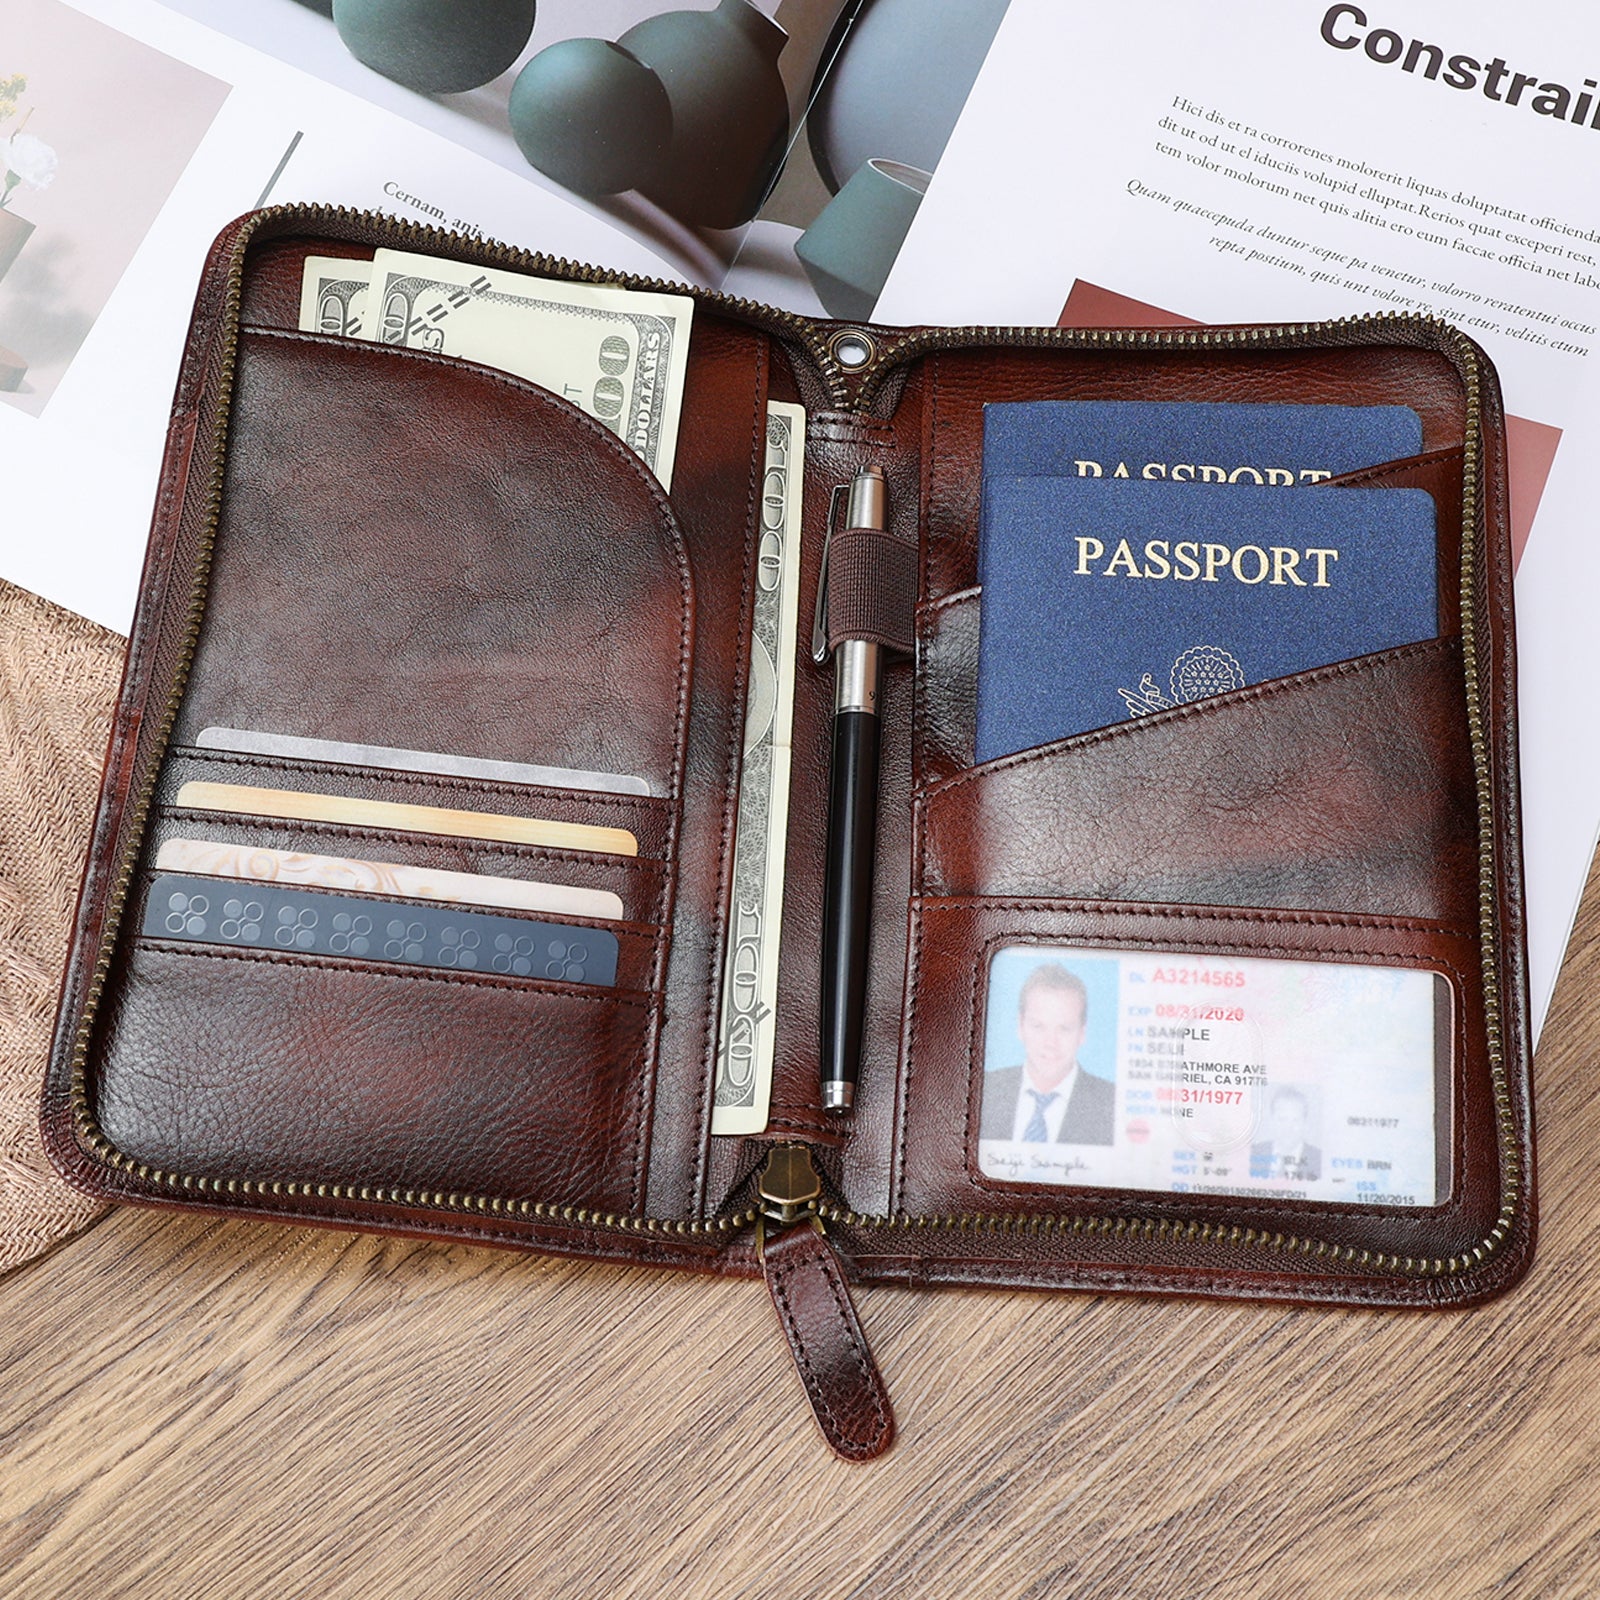 Polare Full Grain Leather Passport Holder with YKK Zipper RFID Blocking Travel Document Organizer Ticket Holder Cover Case Holds 2 Passports Dark